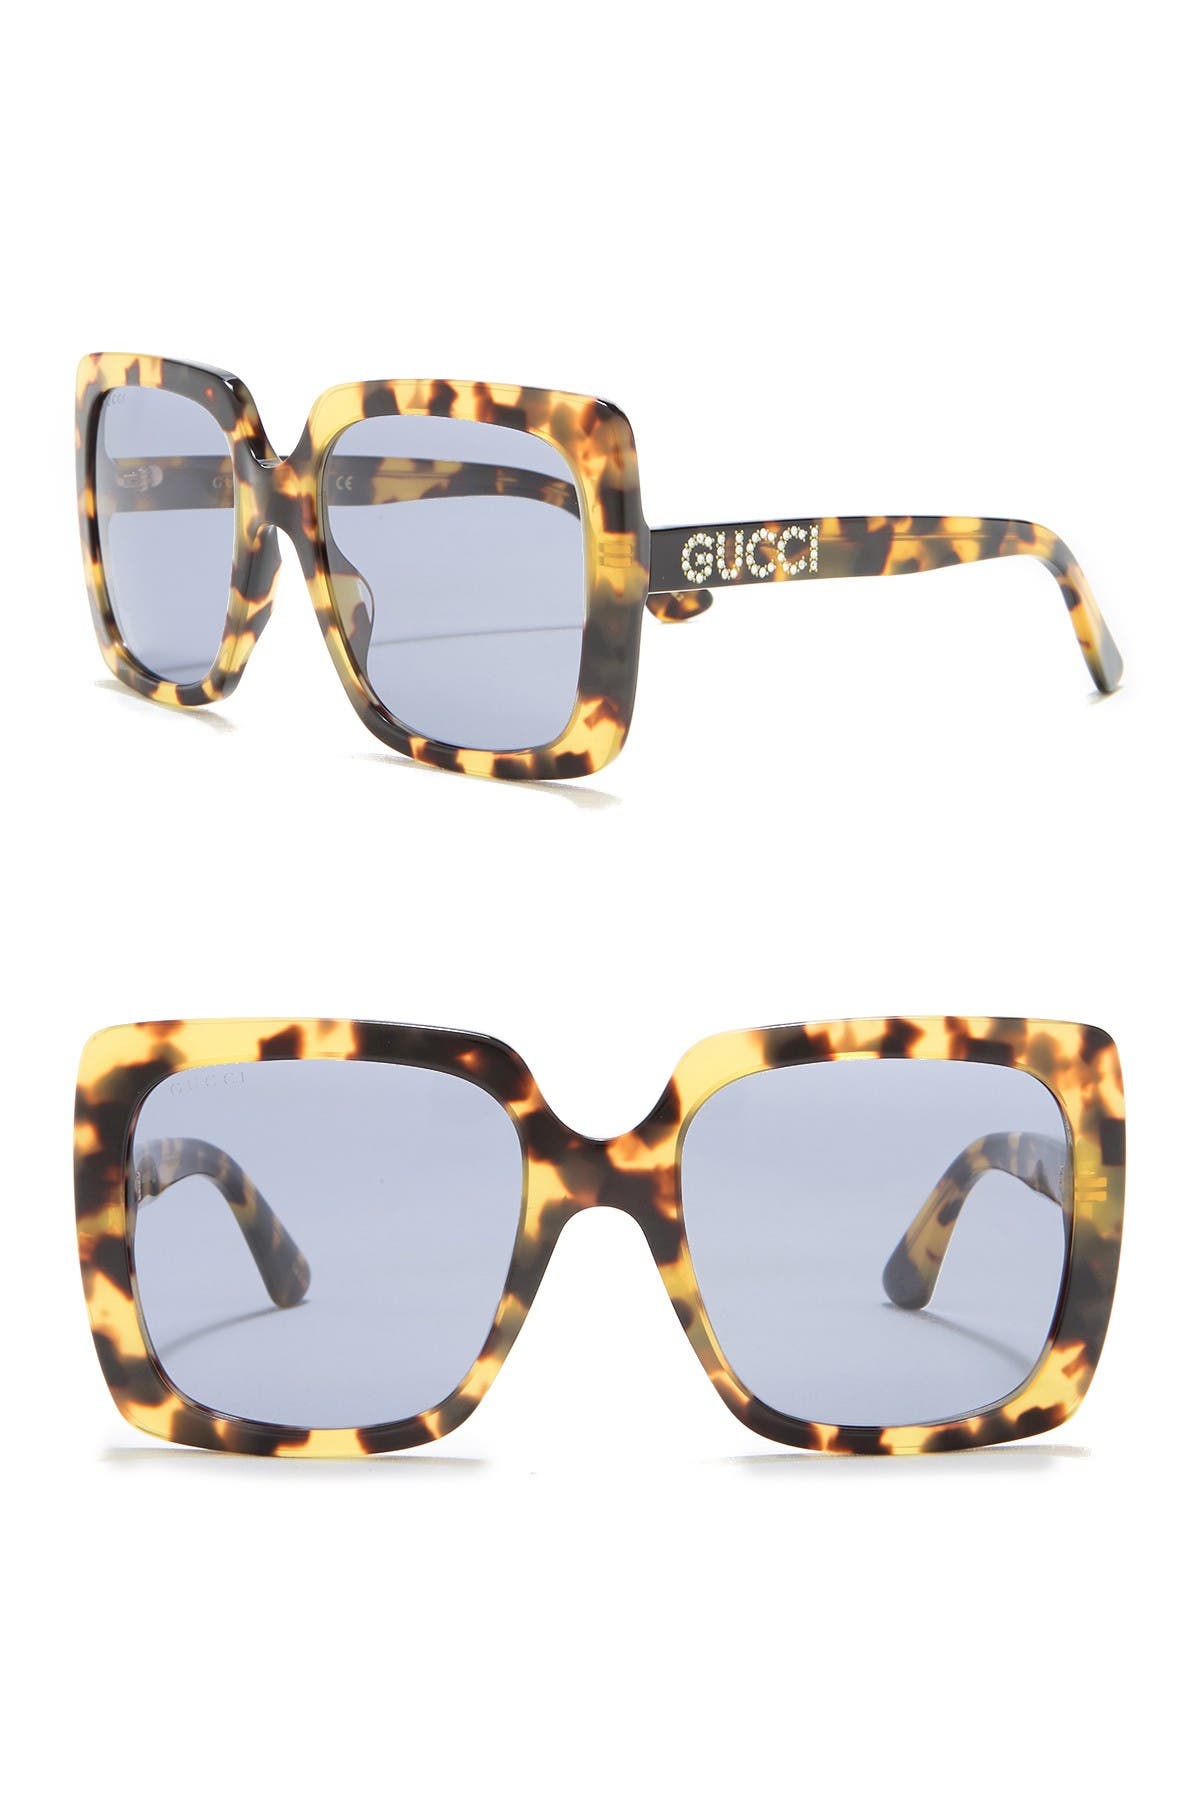 gucci sunglasses nordstrom rack